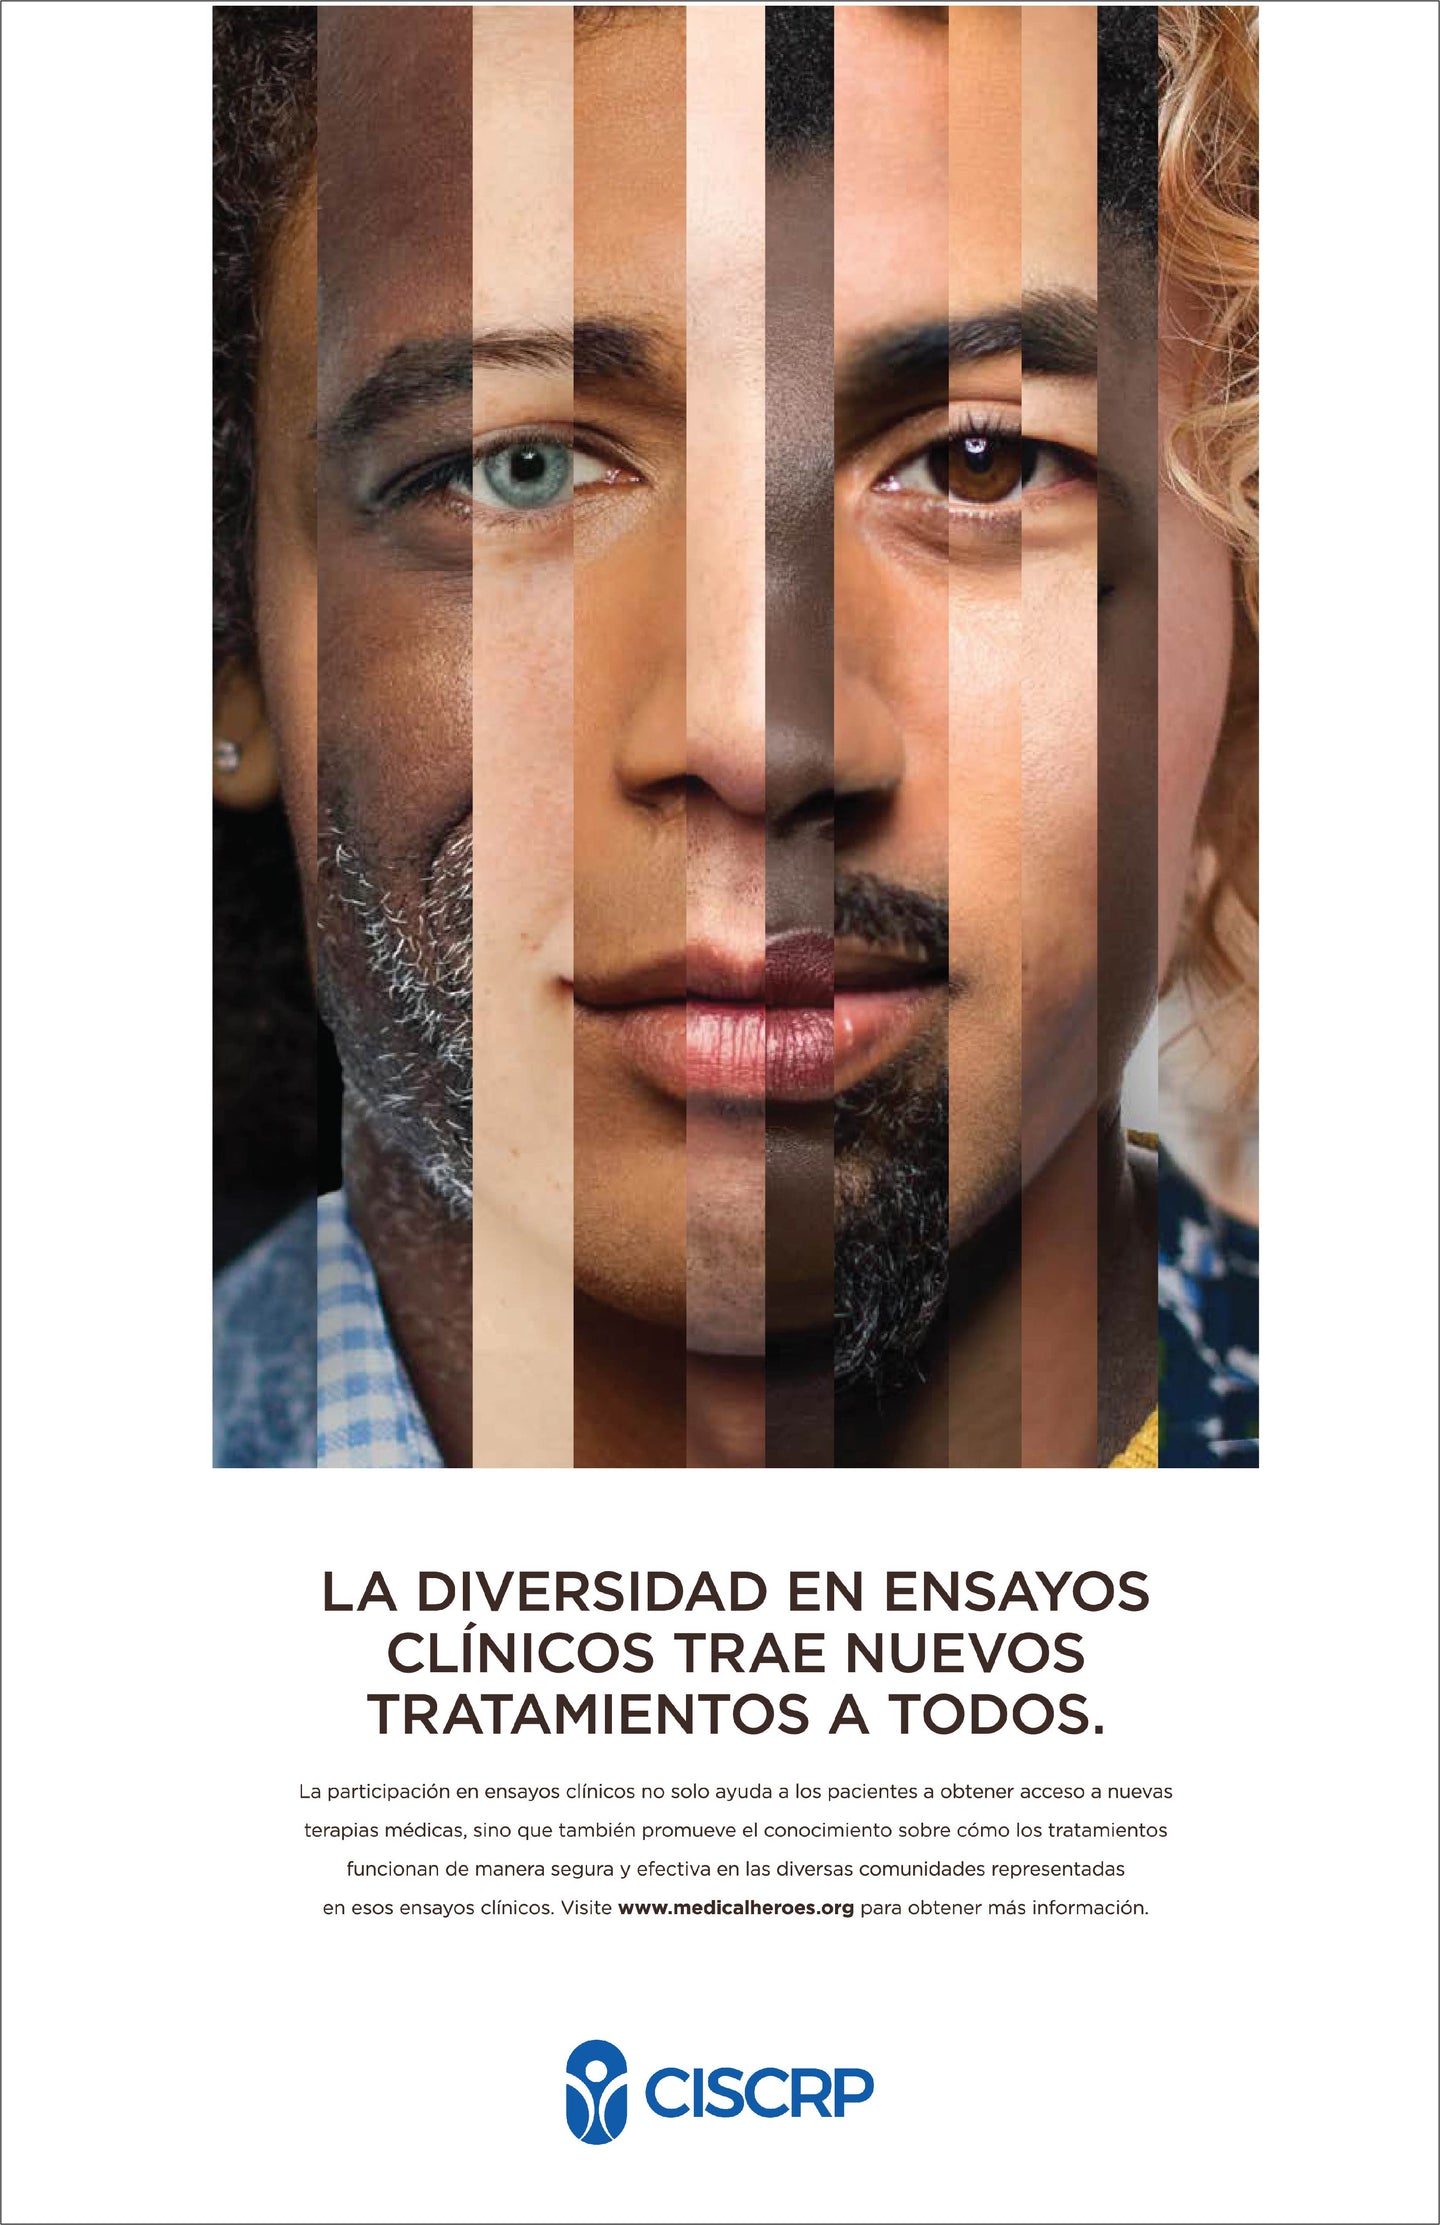 2019 Patient Diversity Poster in Spanish